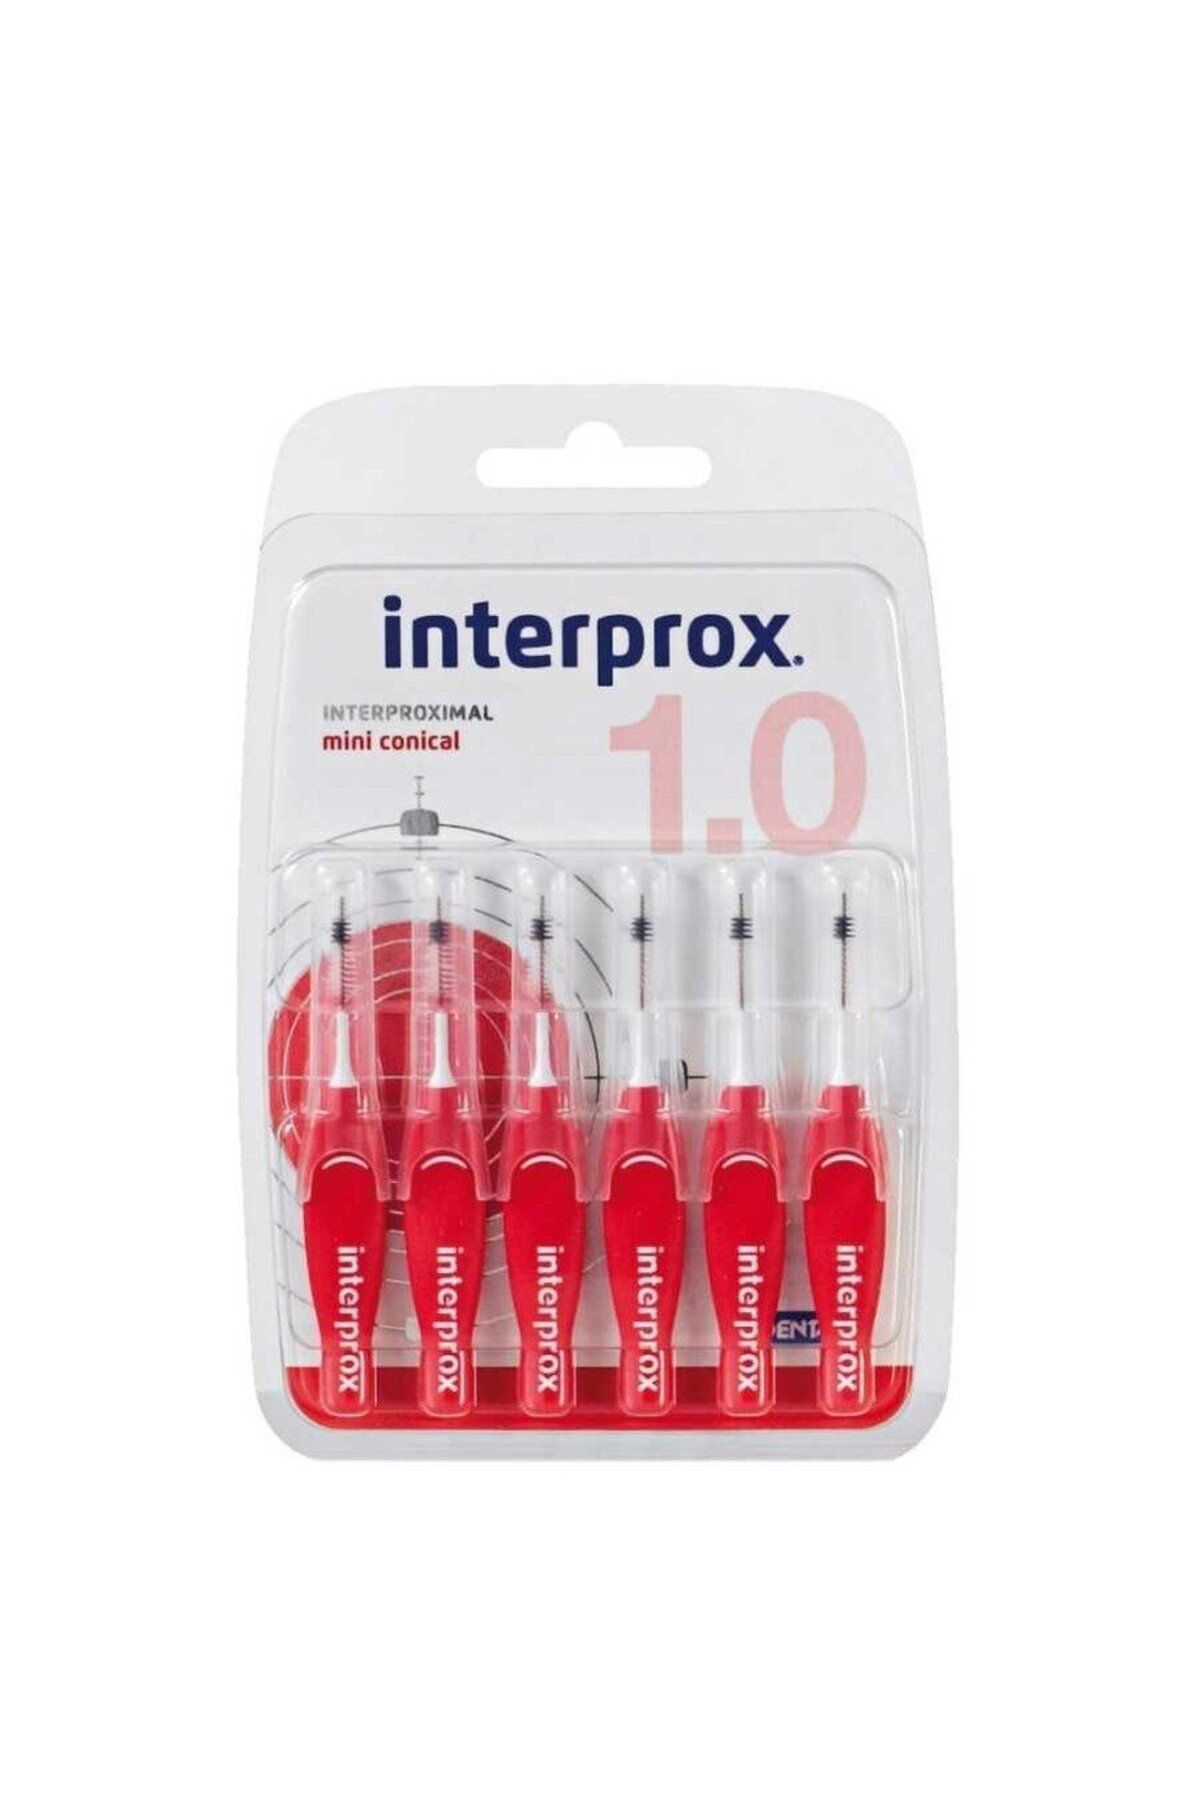 İnterprox Interprox Interproximal Mini Conical 1.0mm Arayüz Fırçası 6 Adet Kırmızı